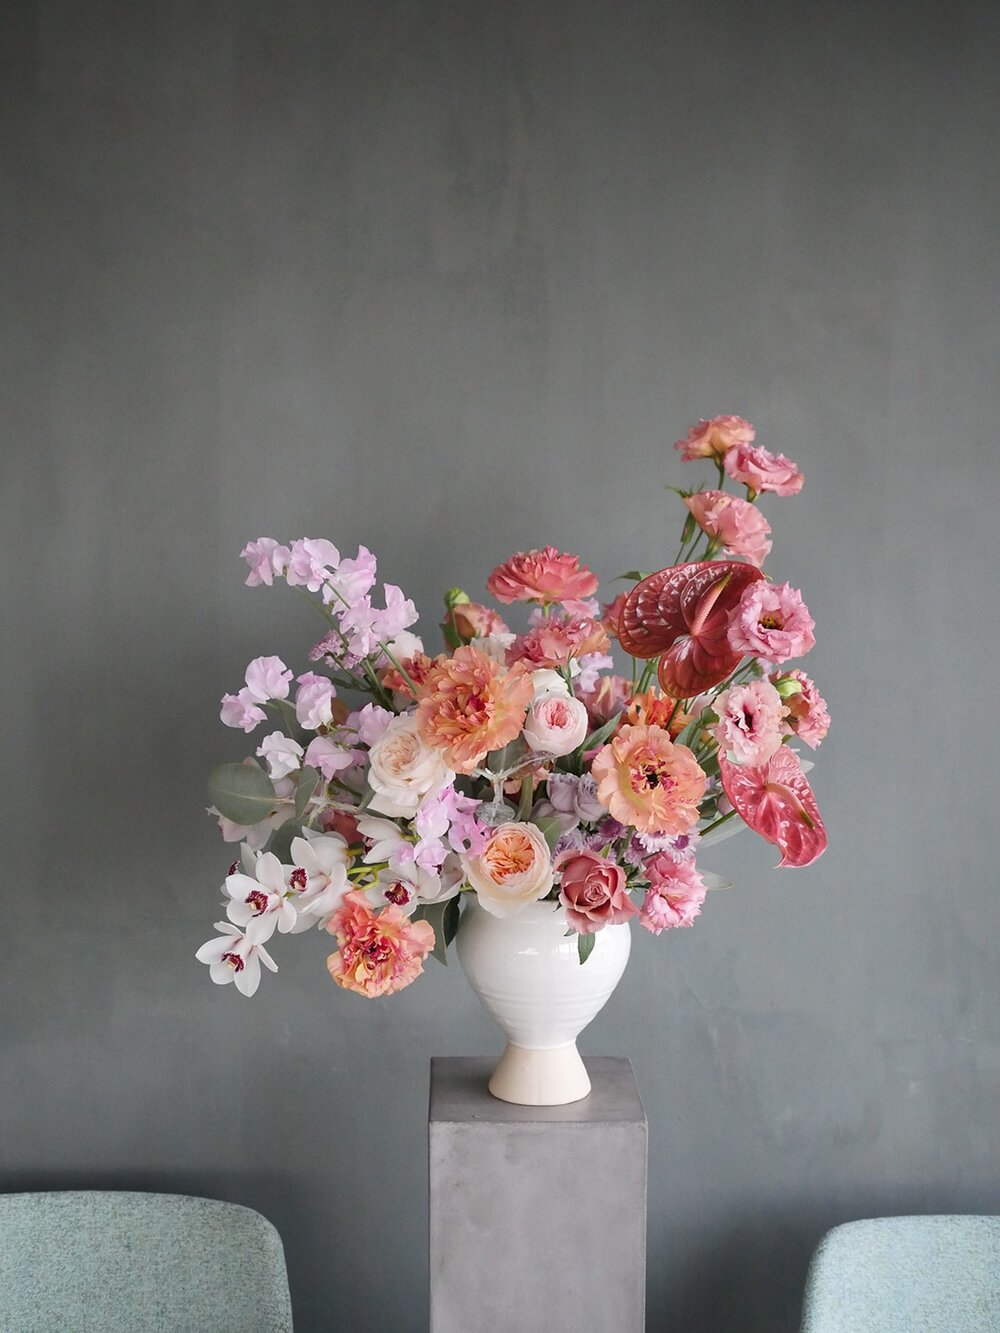 Large Flower arrangement in a white vase